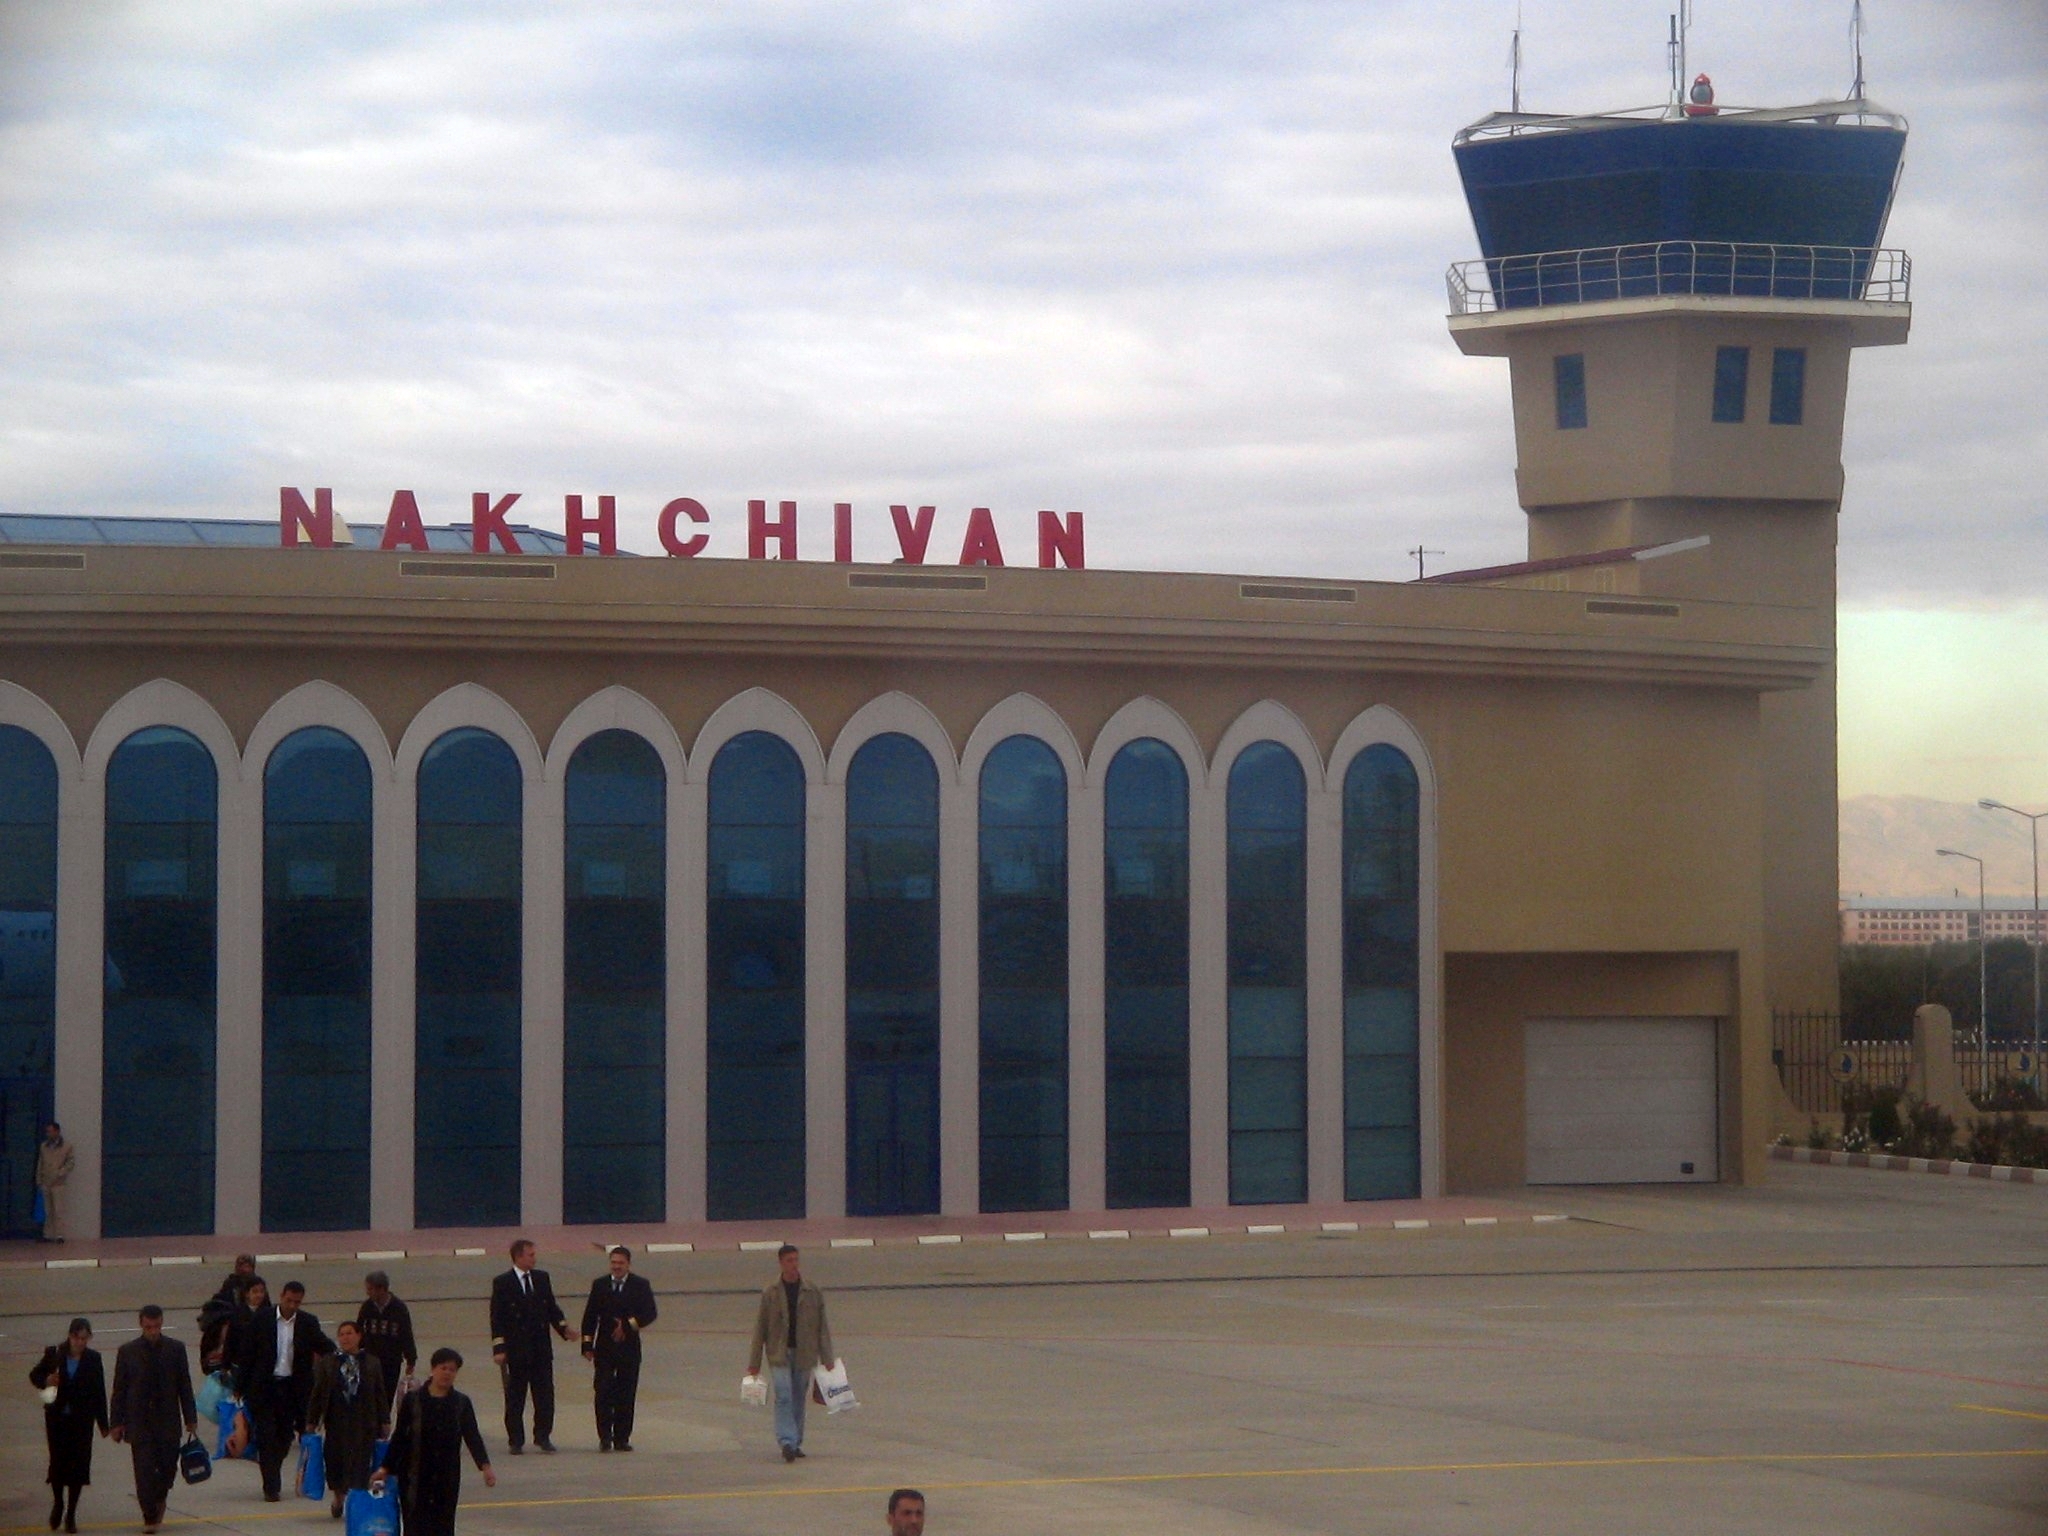 Nakhchivan Airport